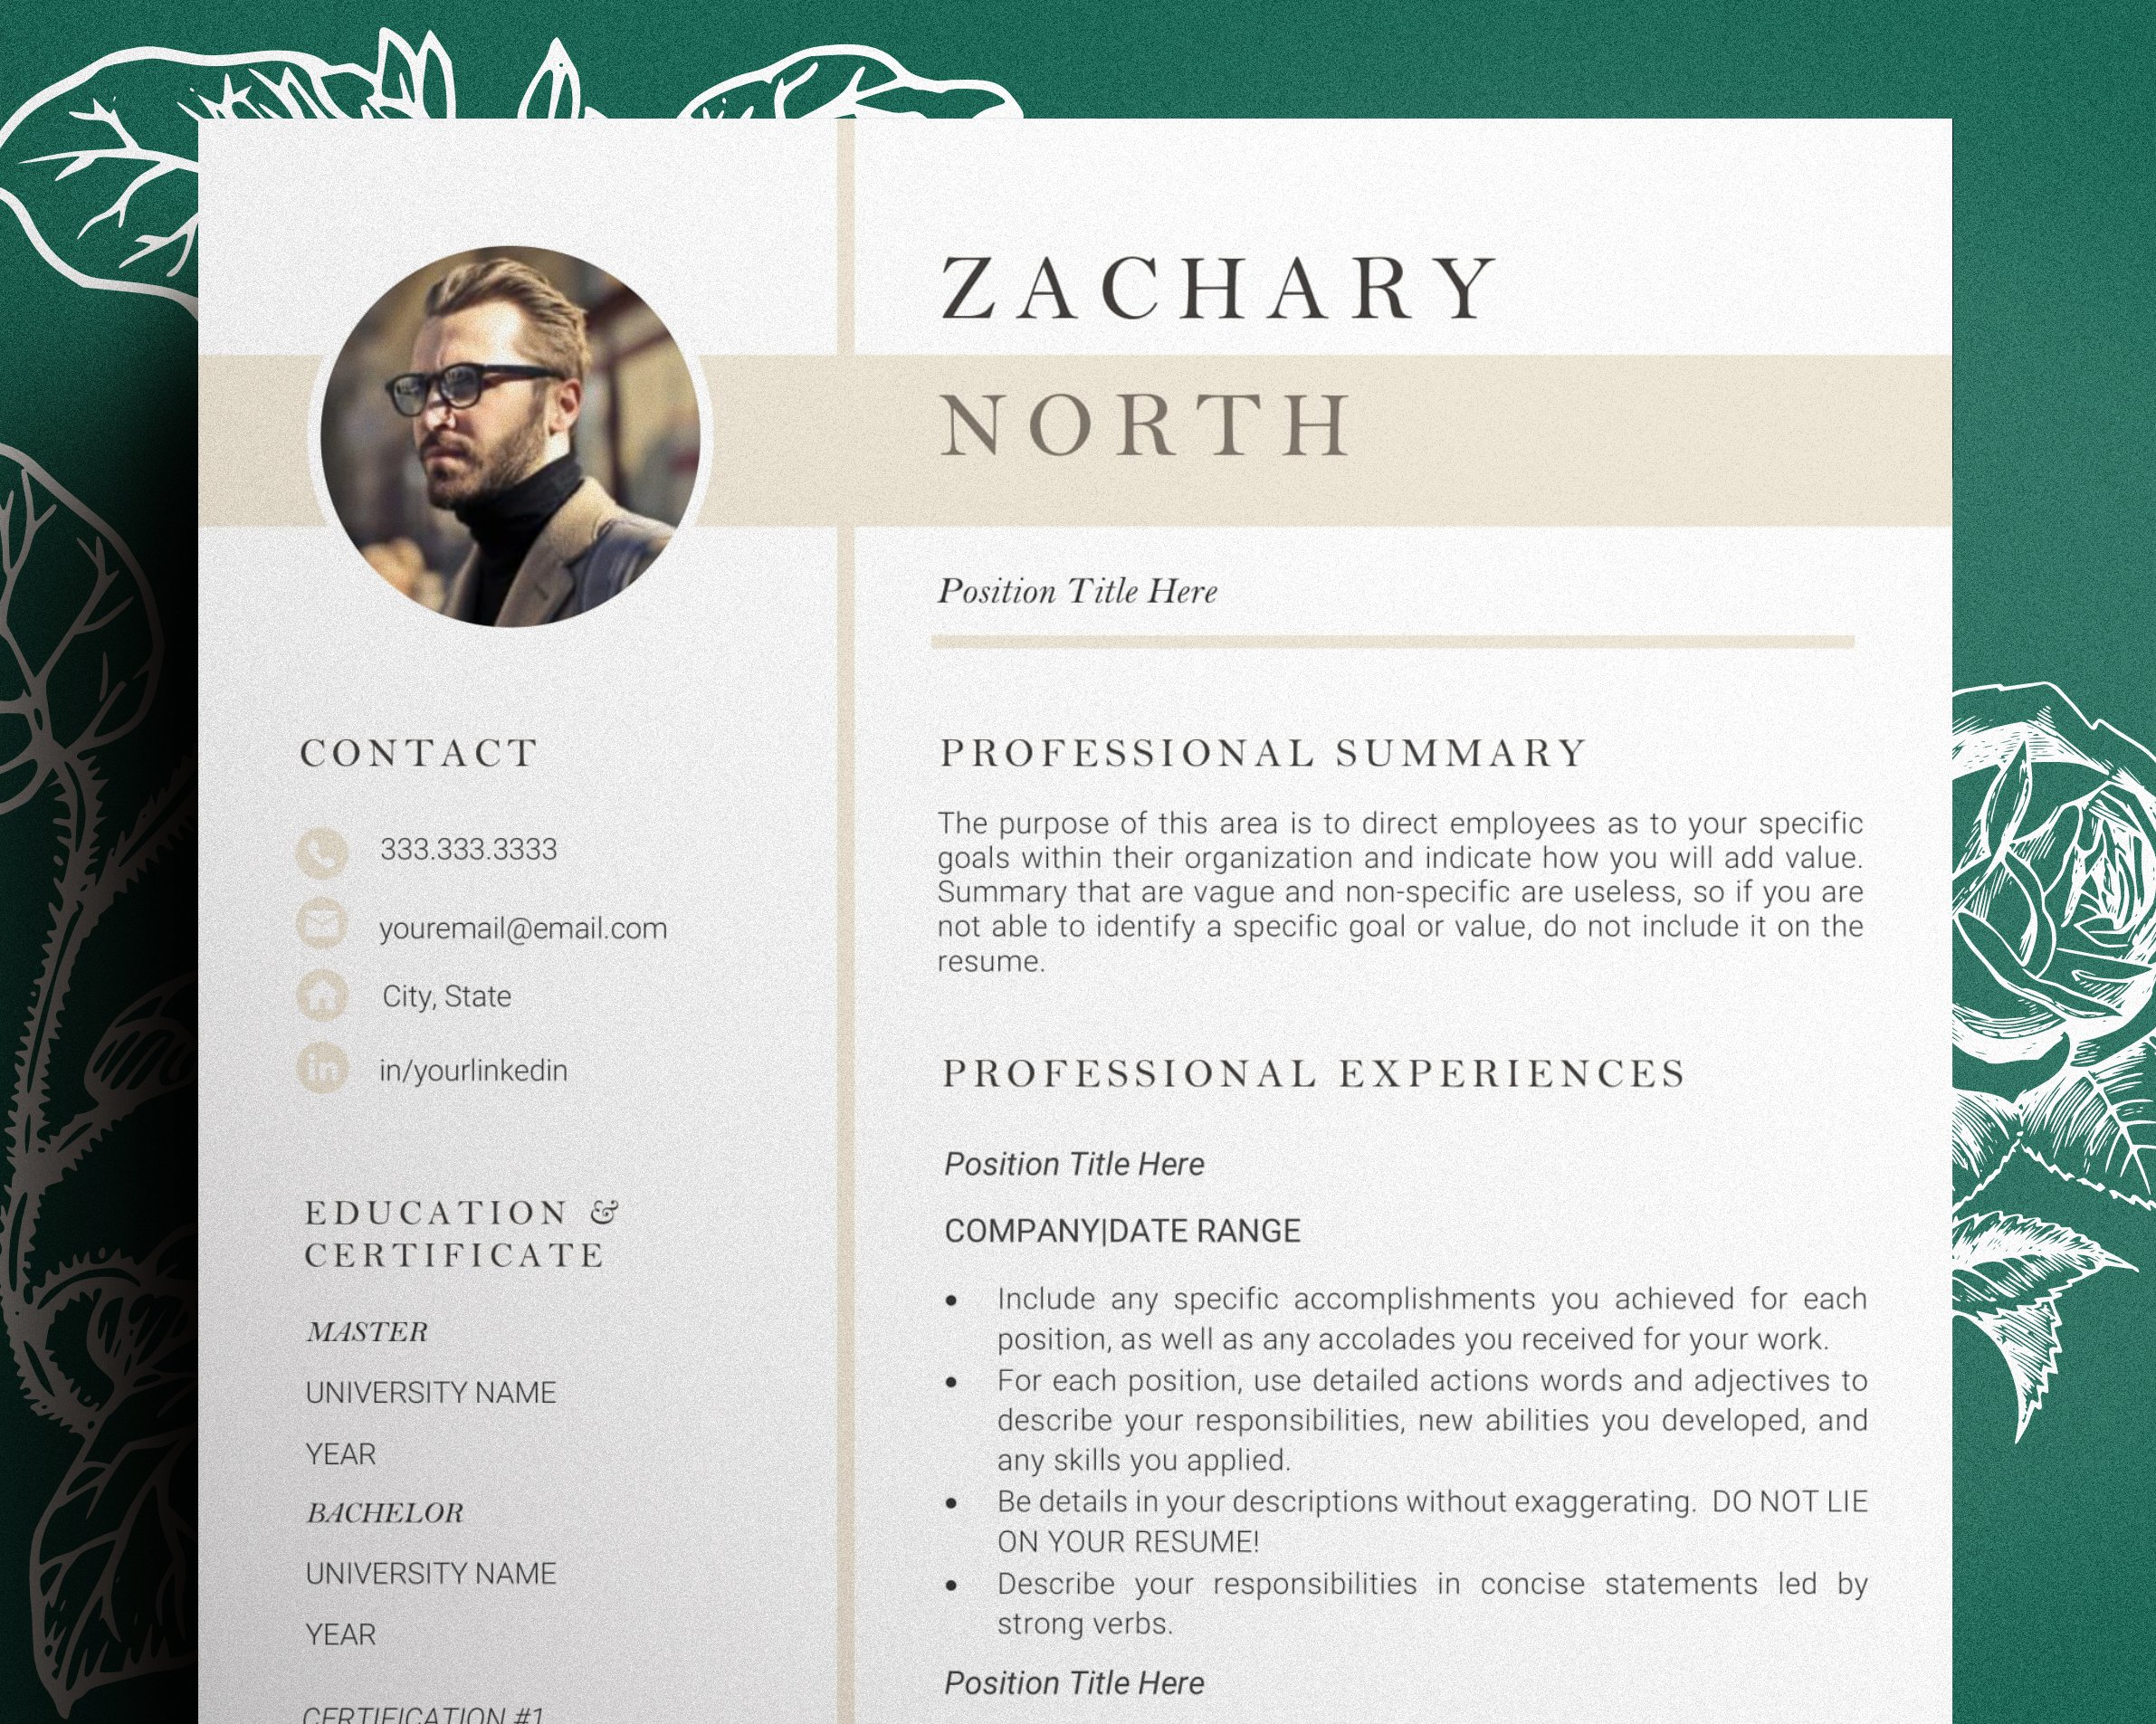 Zachary- Modern Resume / CV Template cover image.